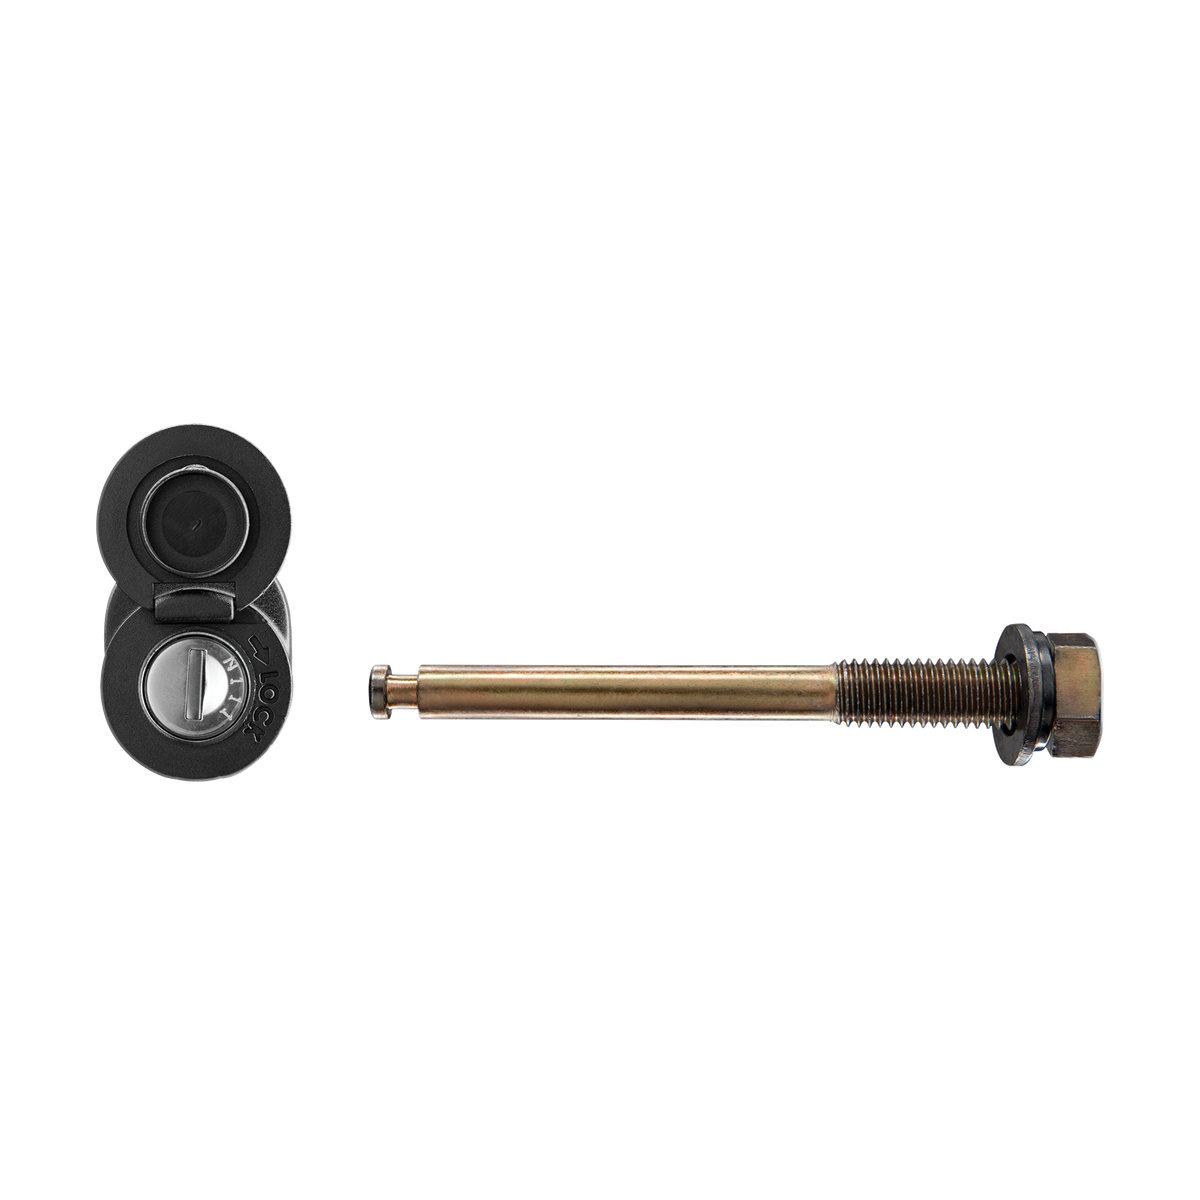 Thule Snug-Tite Receiver Lock receiver lock black